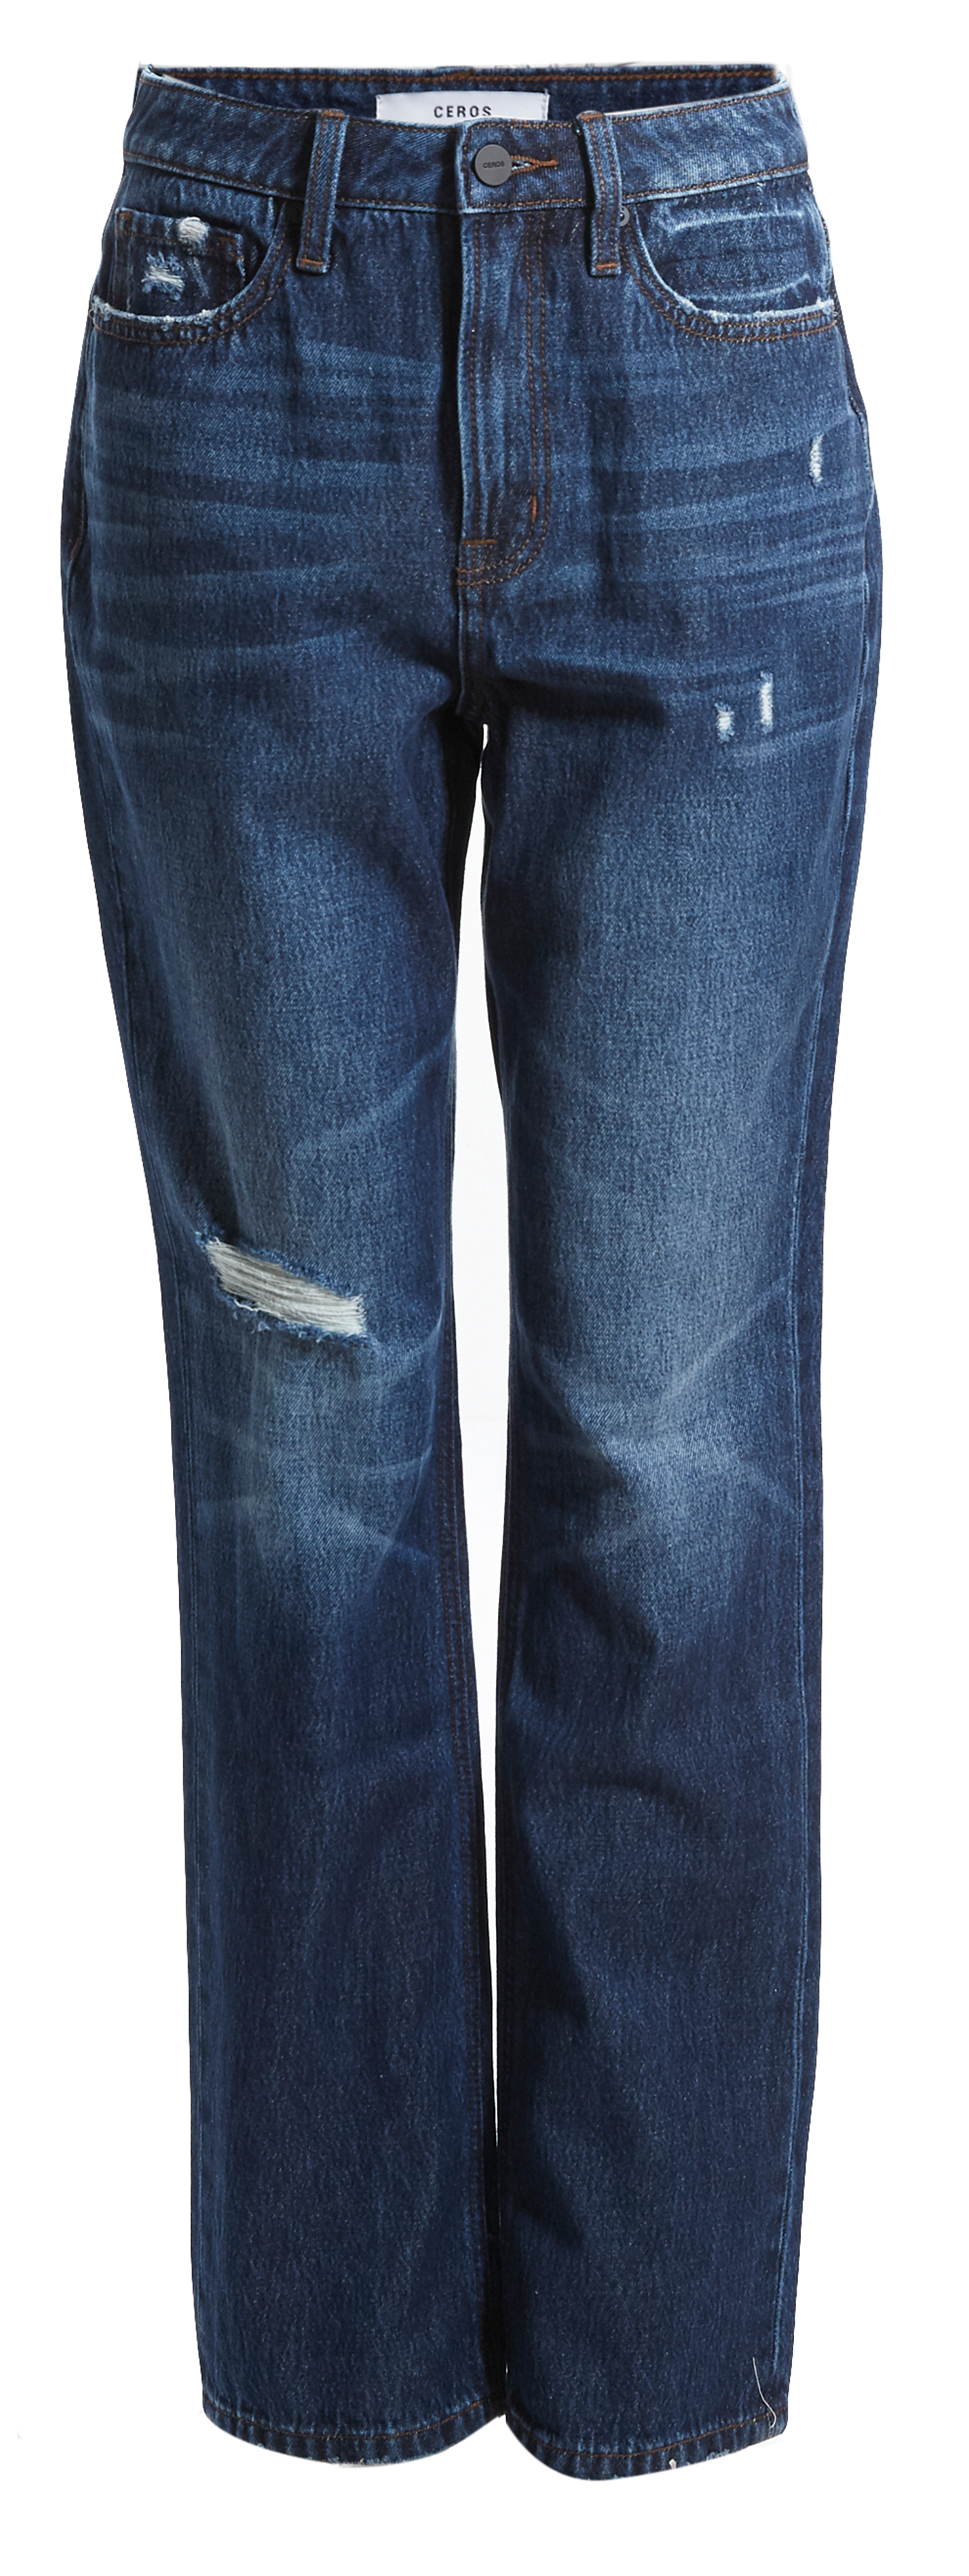 Ceros Jeans High Rise Straight Leg